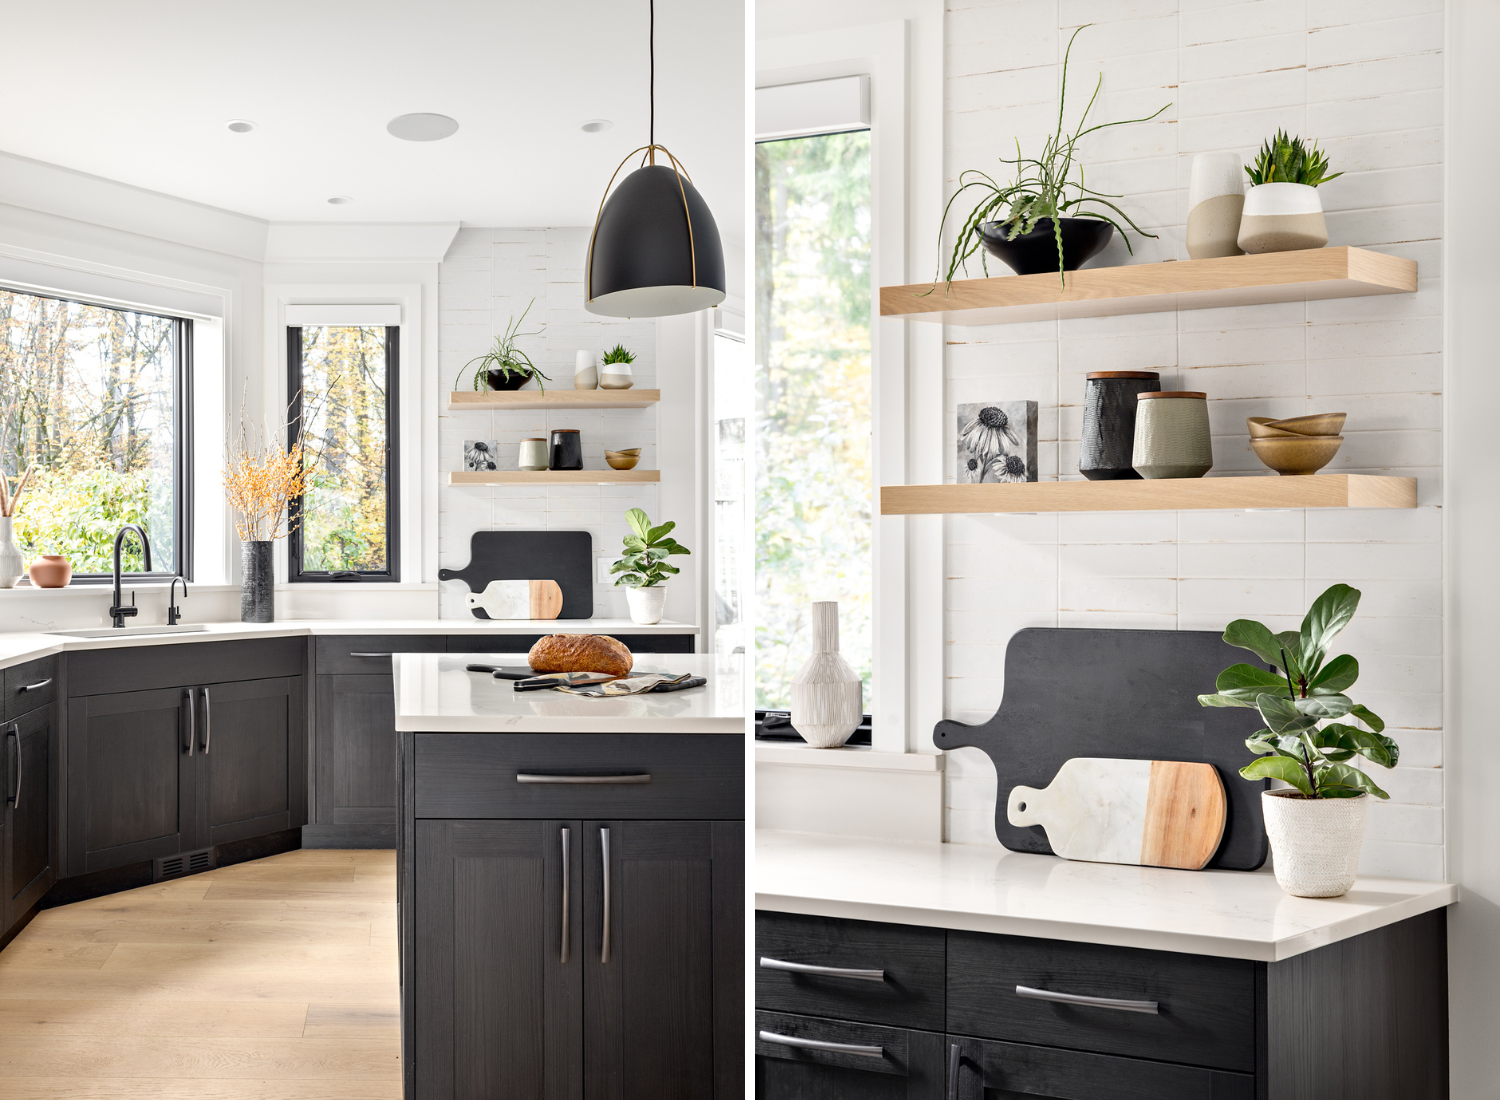 A_Simply Home-larkhall-north-vancouver-kitchen-white-oak-interior-decor-open shelving-black-pendants-plants